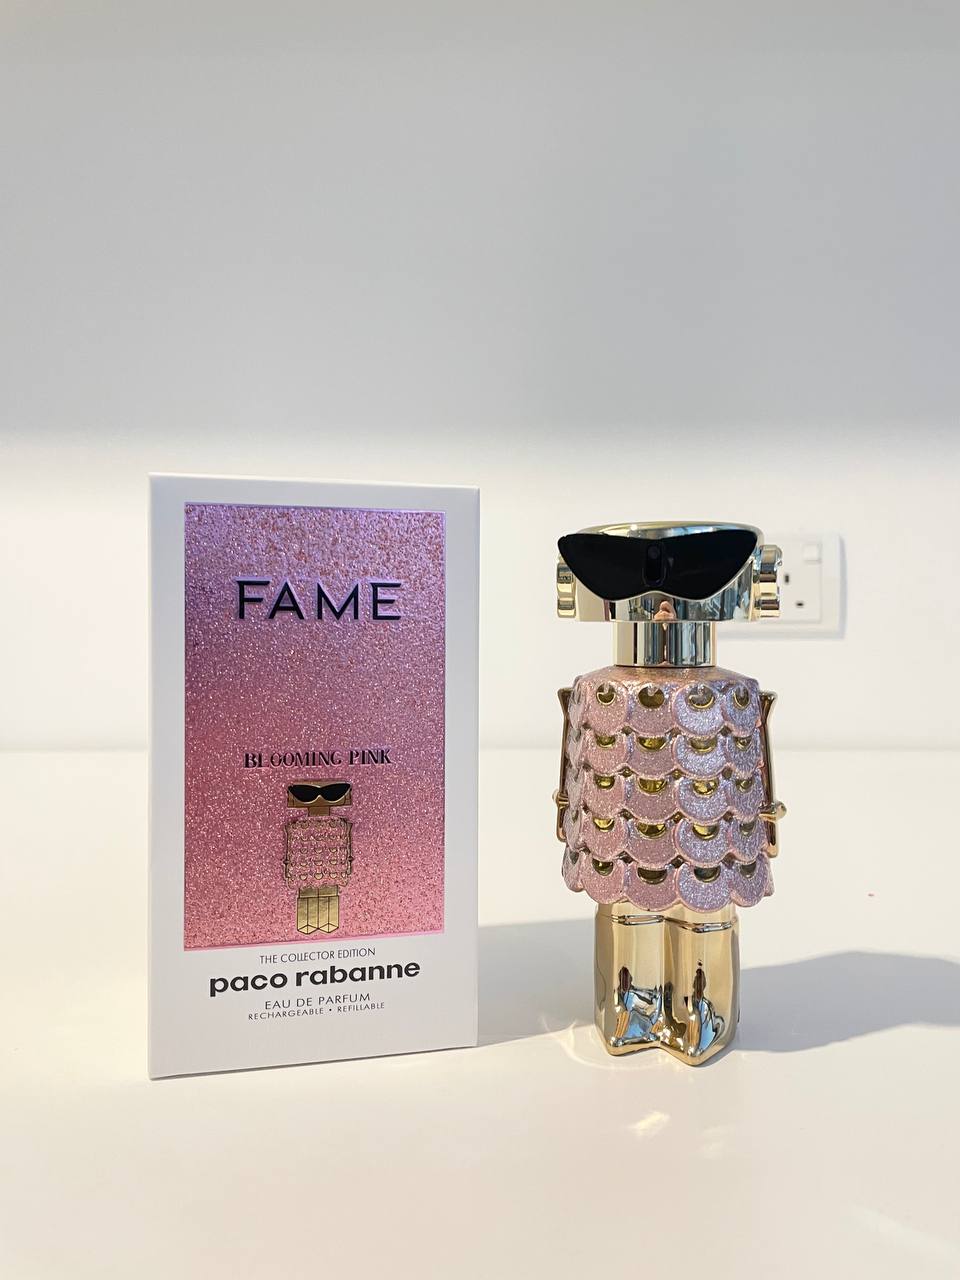 PACO RABANNE FAME BLOOMING PINK EDP 80ML – Perfume